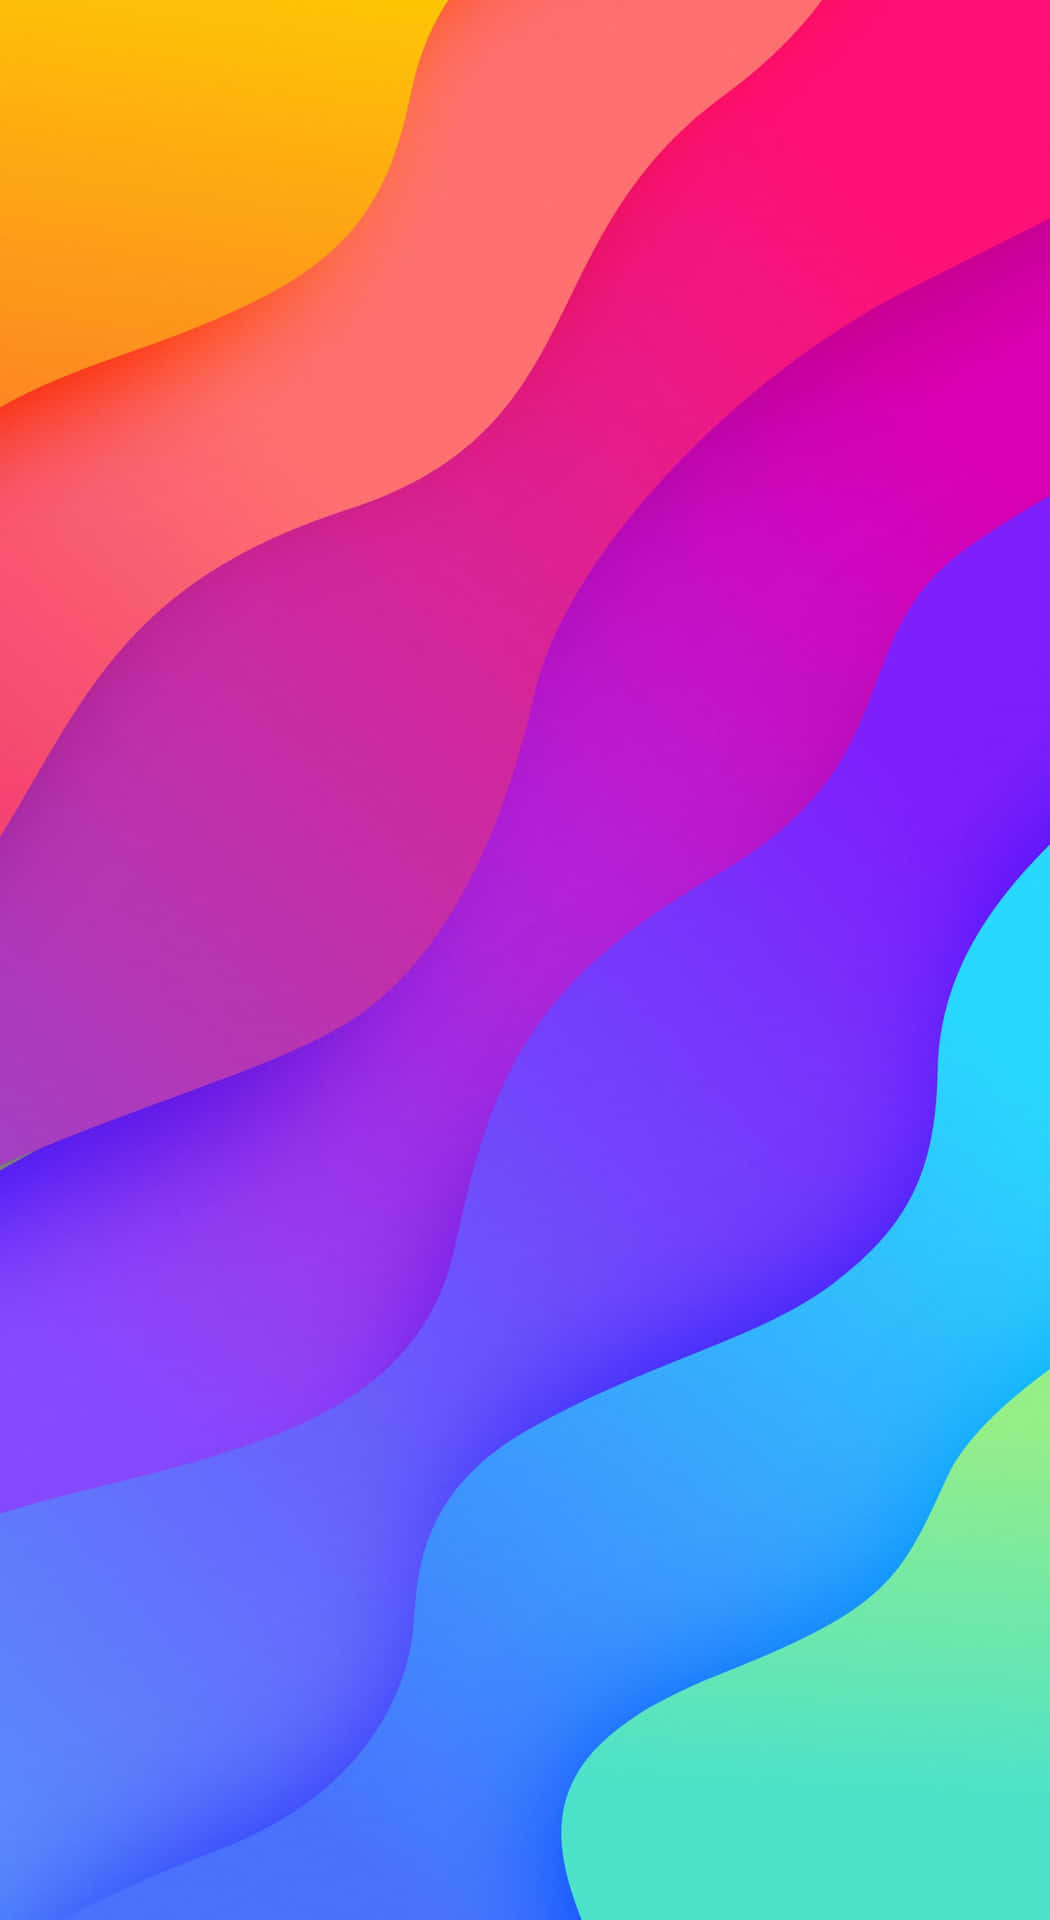 100+] Rainbow Iphone Wallpapers